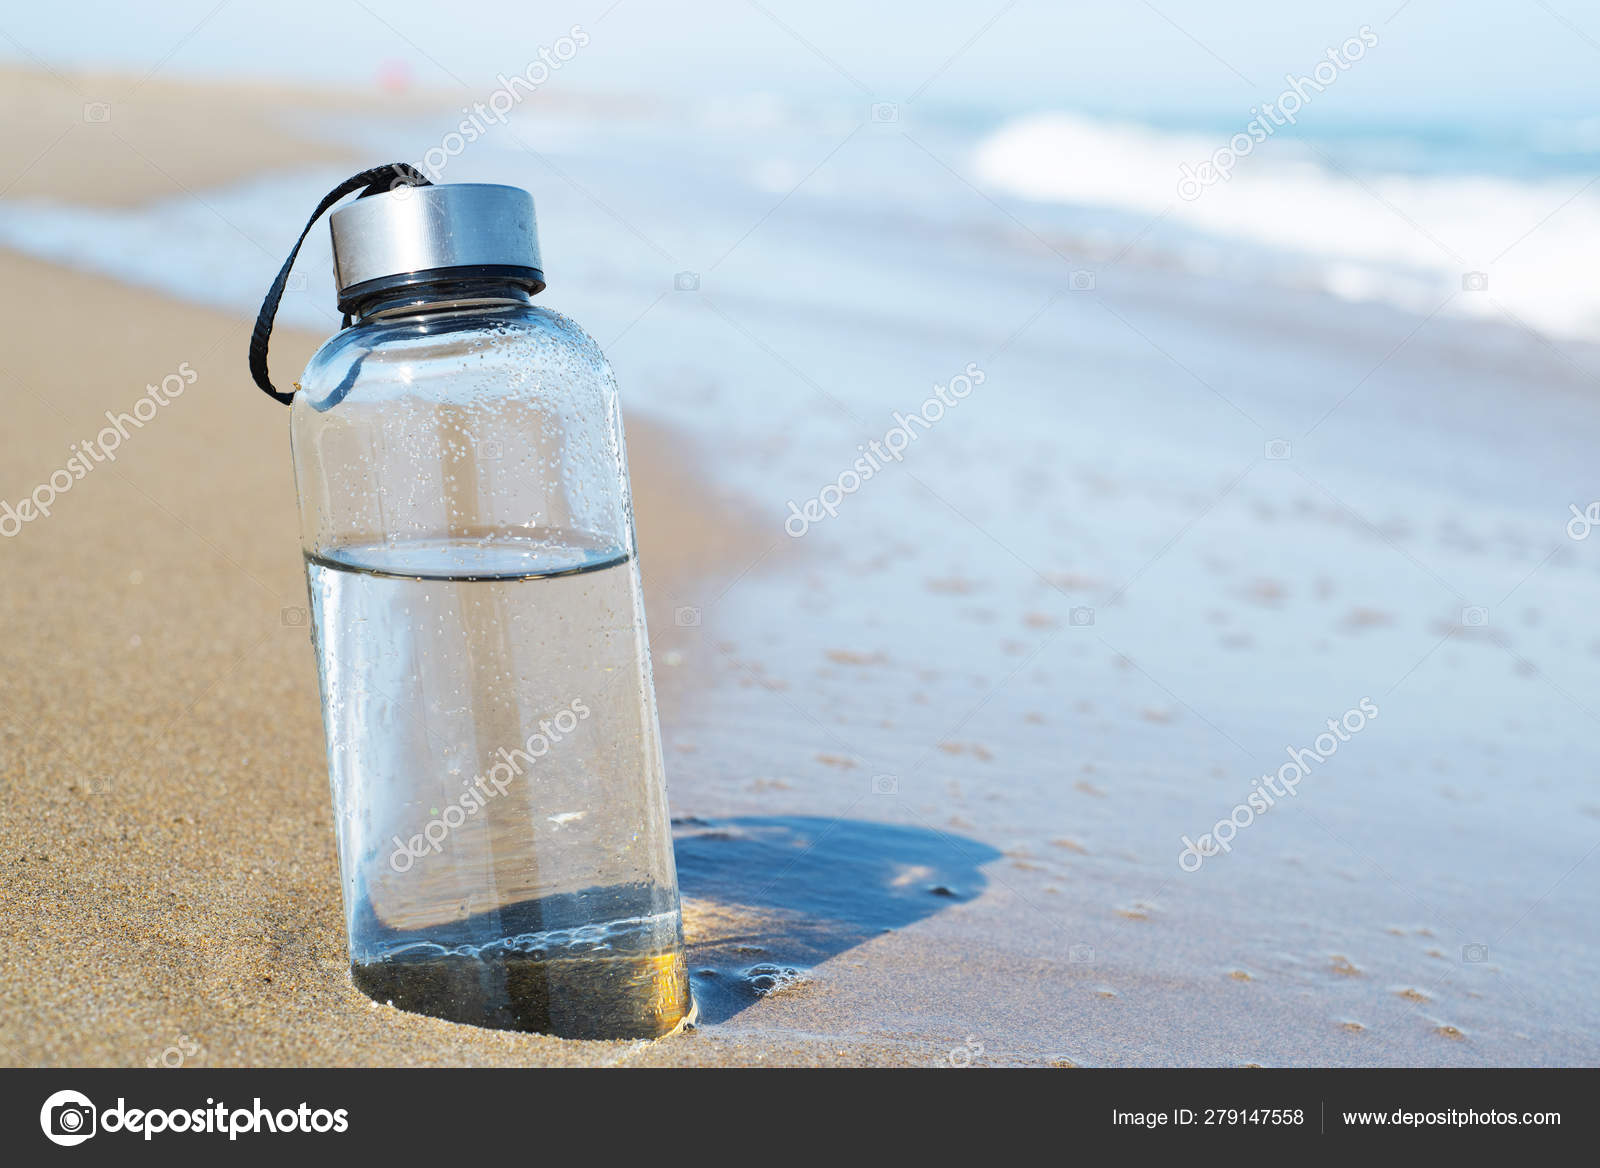 https://st4.depositphotos.com/1022214/27914/i/1600/depositphotos_279147558-stock-photo-reusable-water-bottle-on-the.jpg